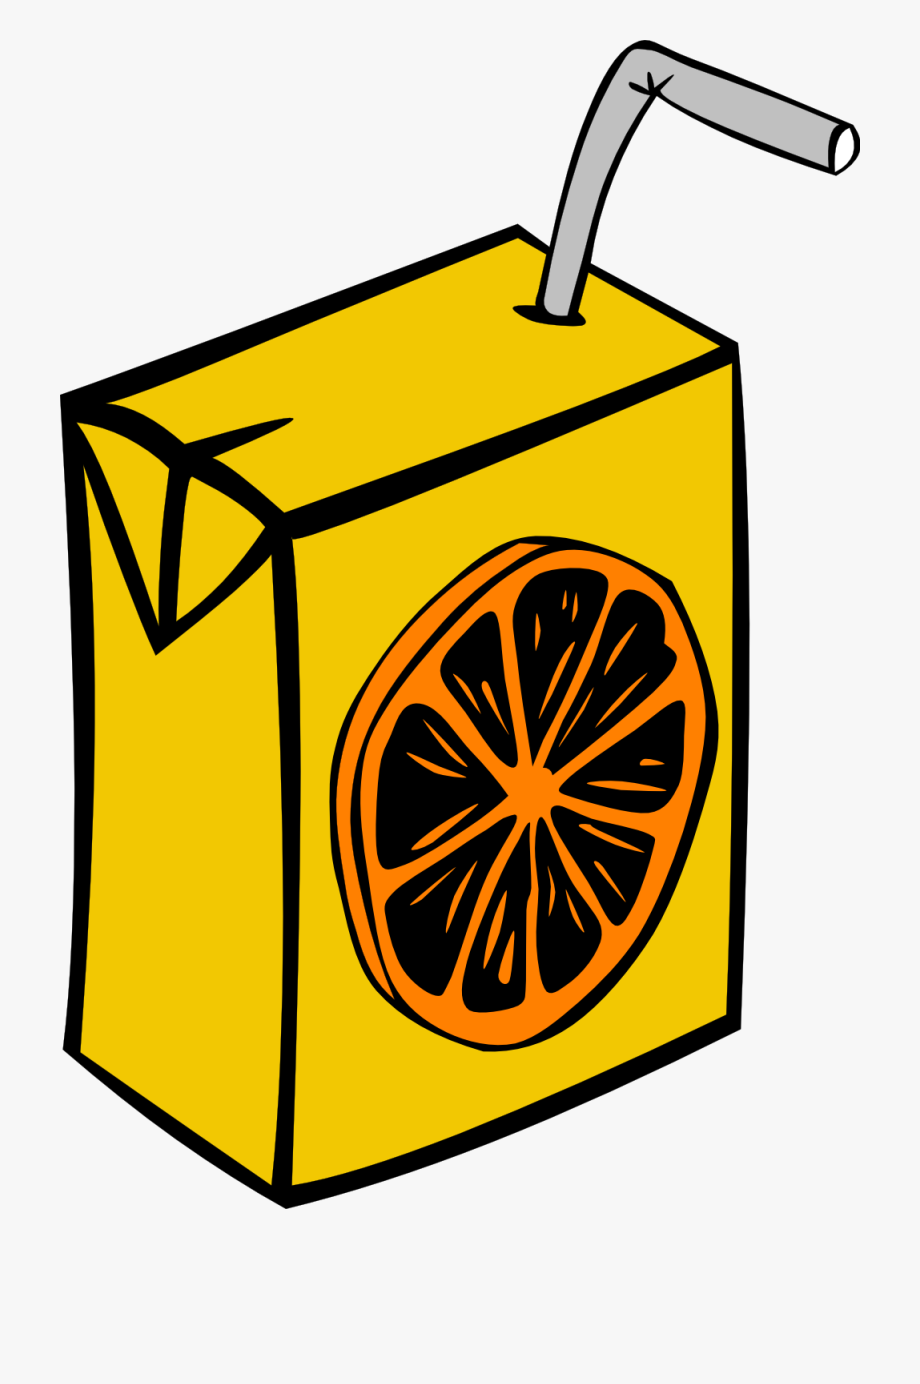 Orange juice box.